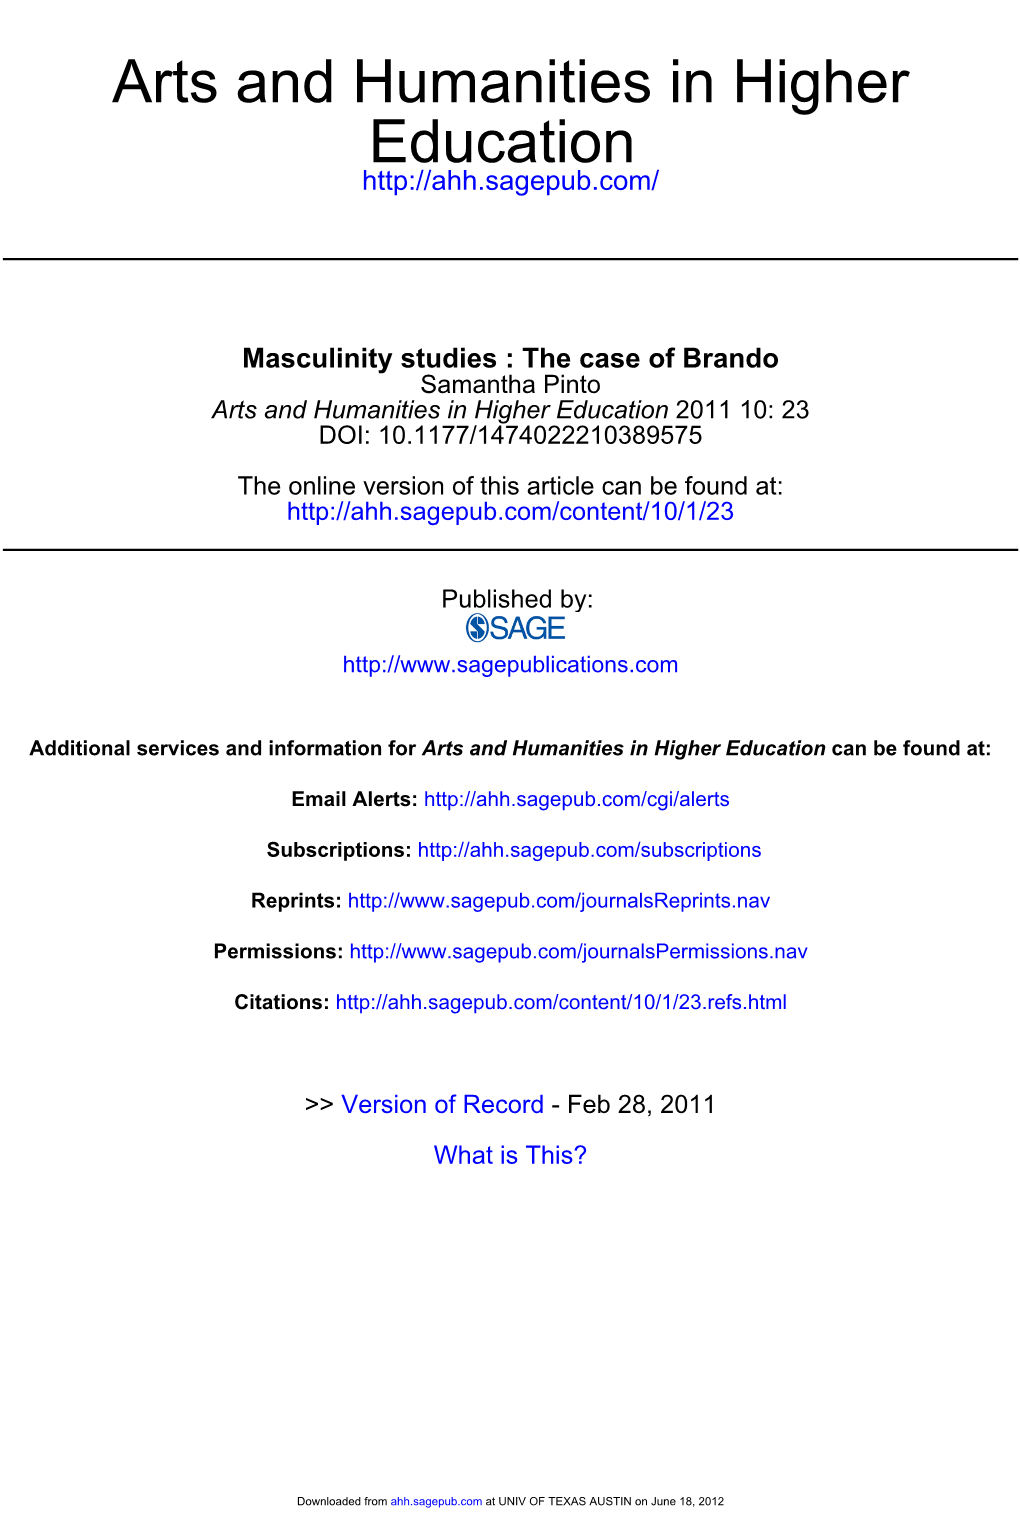 Masculinity Studies: the Case of Brando